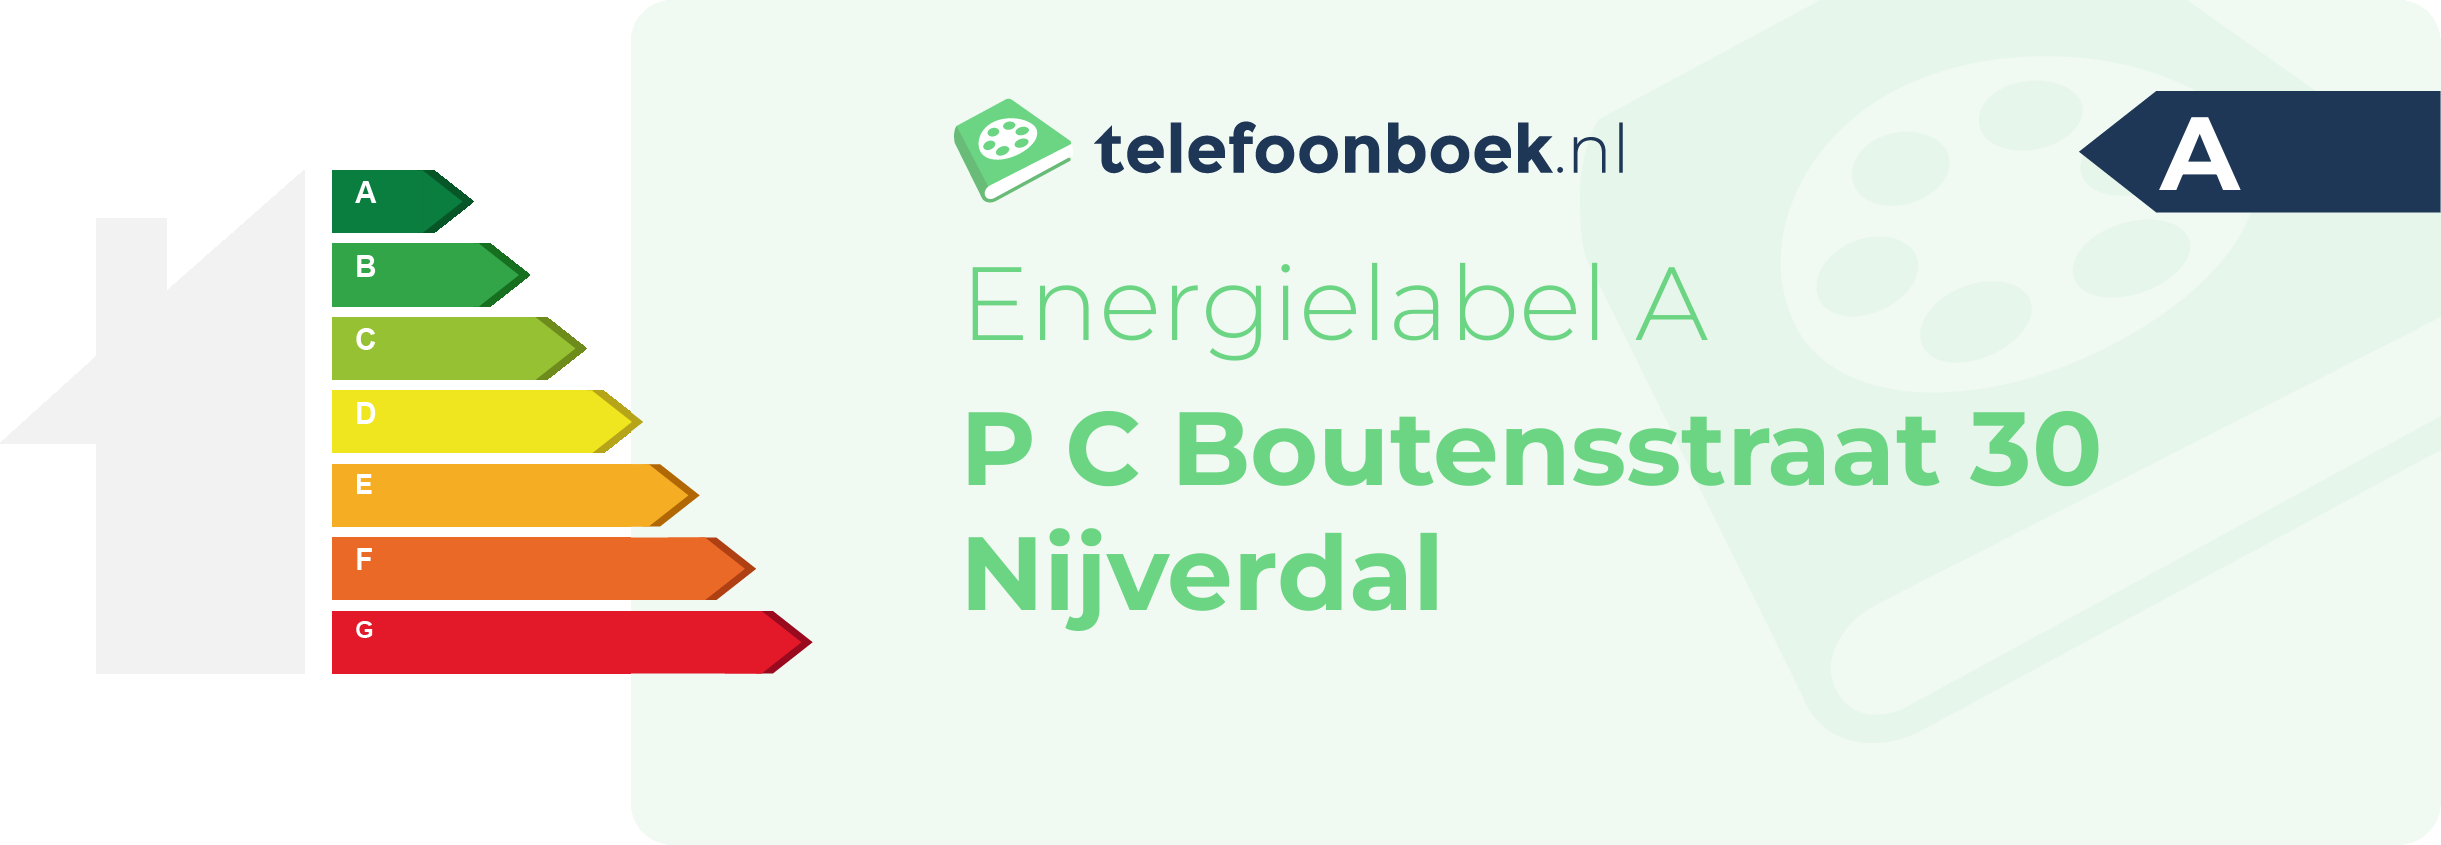 Energielabel P C Boutensstraat 30 Nijverdal